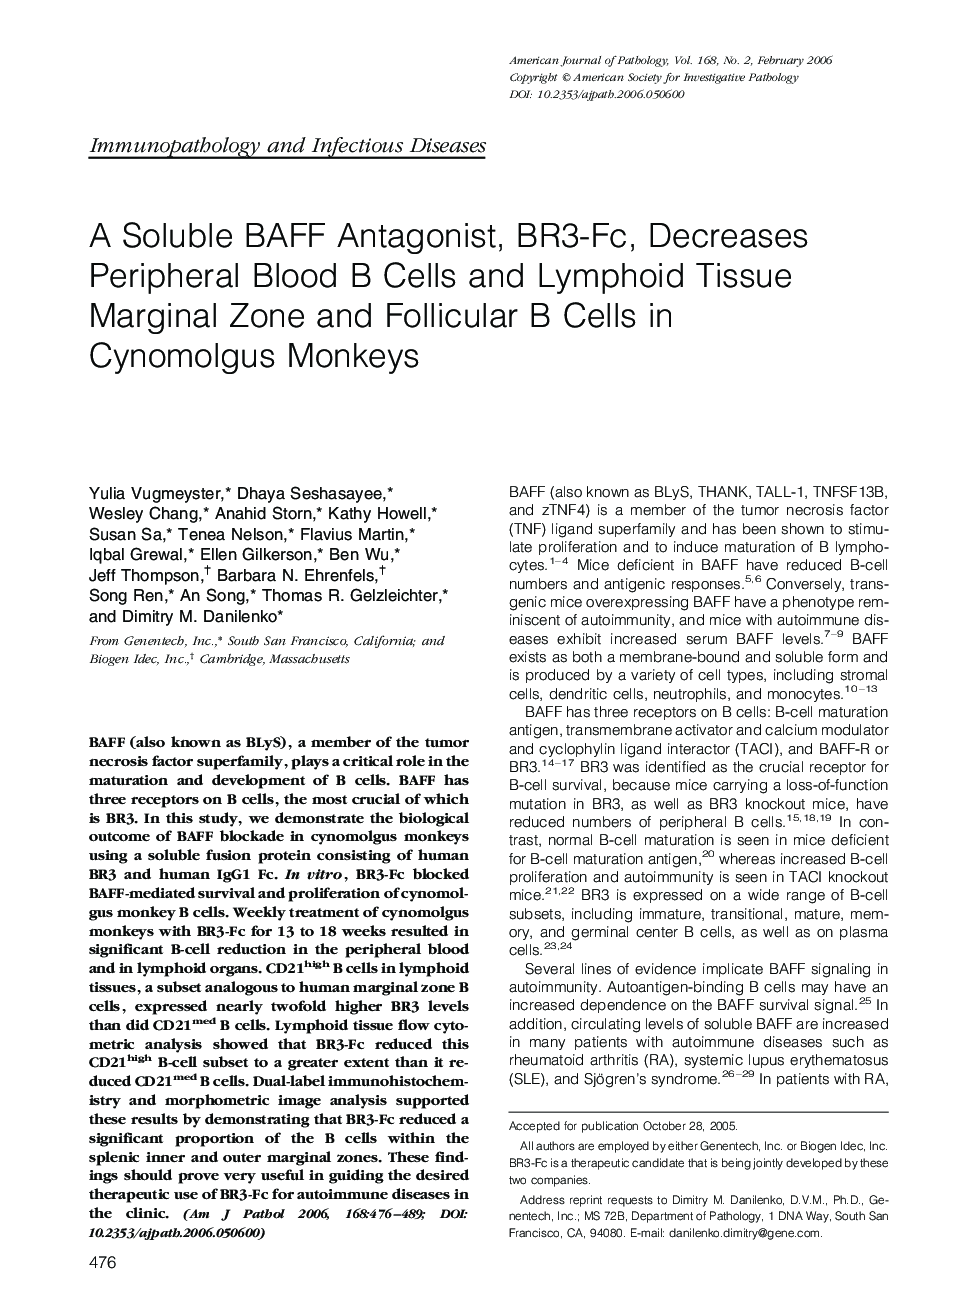 Regular ArticlesA Soluble BAFF Antagonist, BR3-Fc, Decreases Peripheral Blood B Cells and Lymphoid Tissue Marginal Zone and Follicular B Cells in Cynomolgus Monkeys